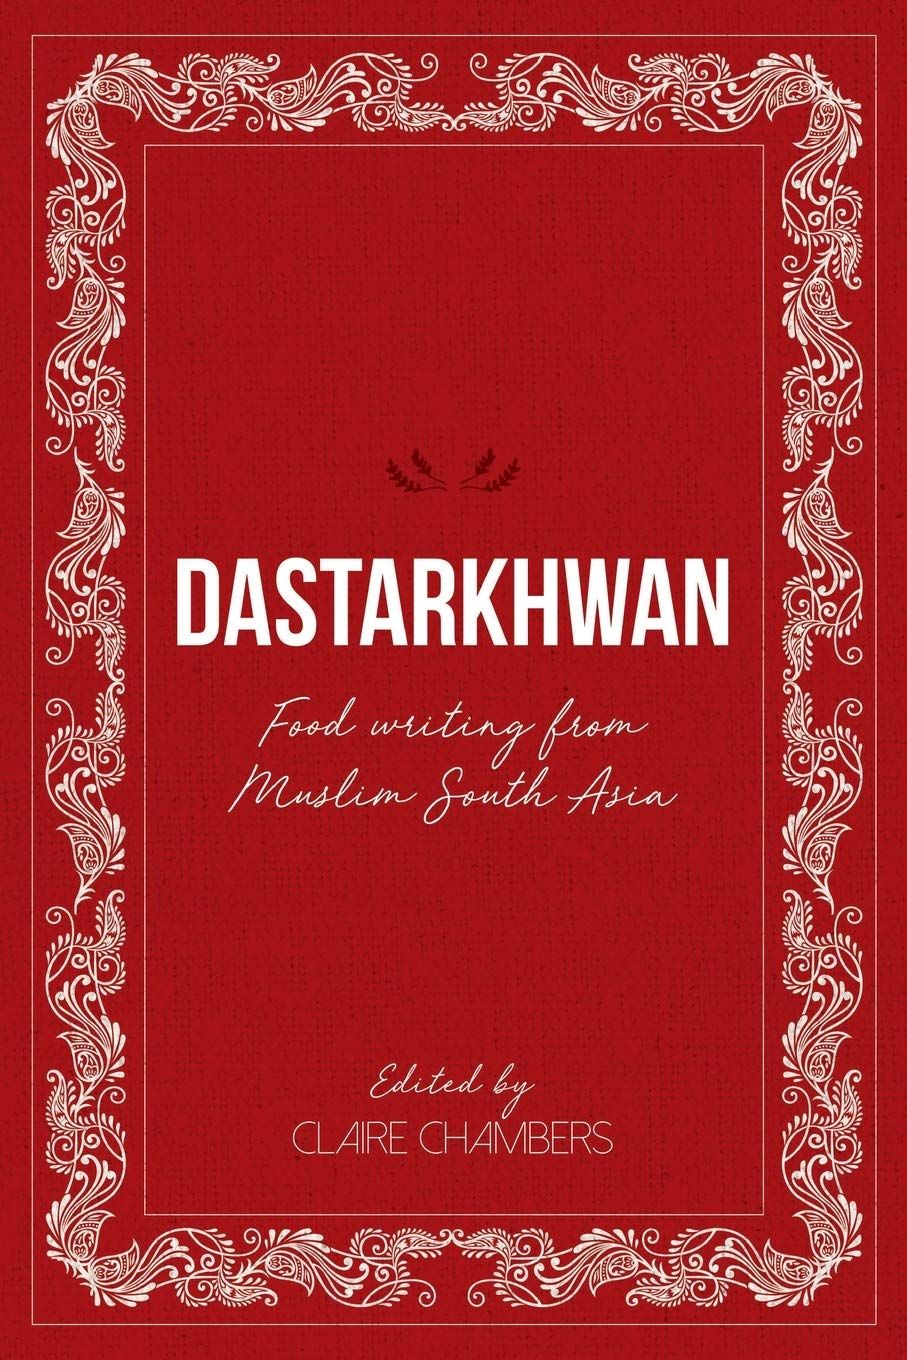 Dastarkhwan: Food Writing From Muslim South Asia